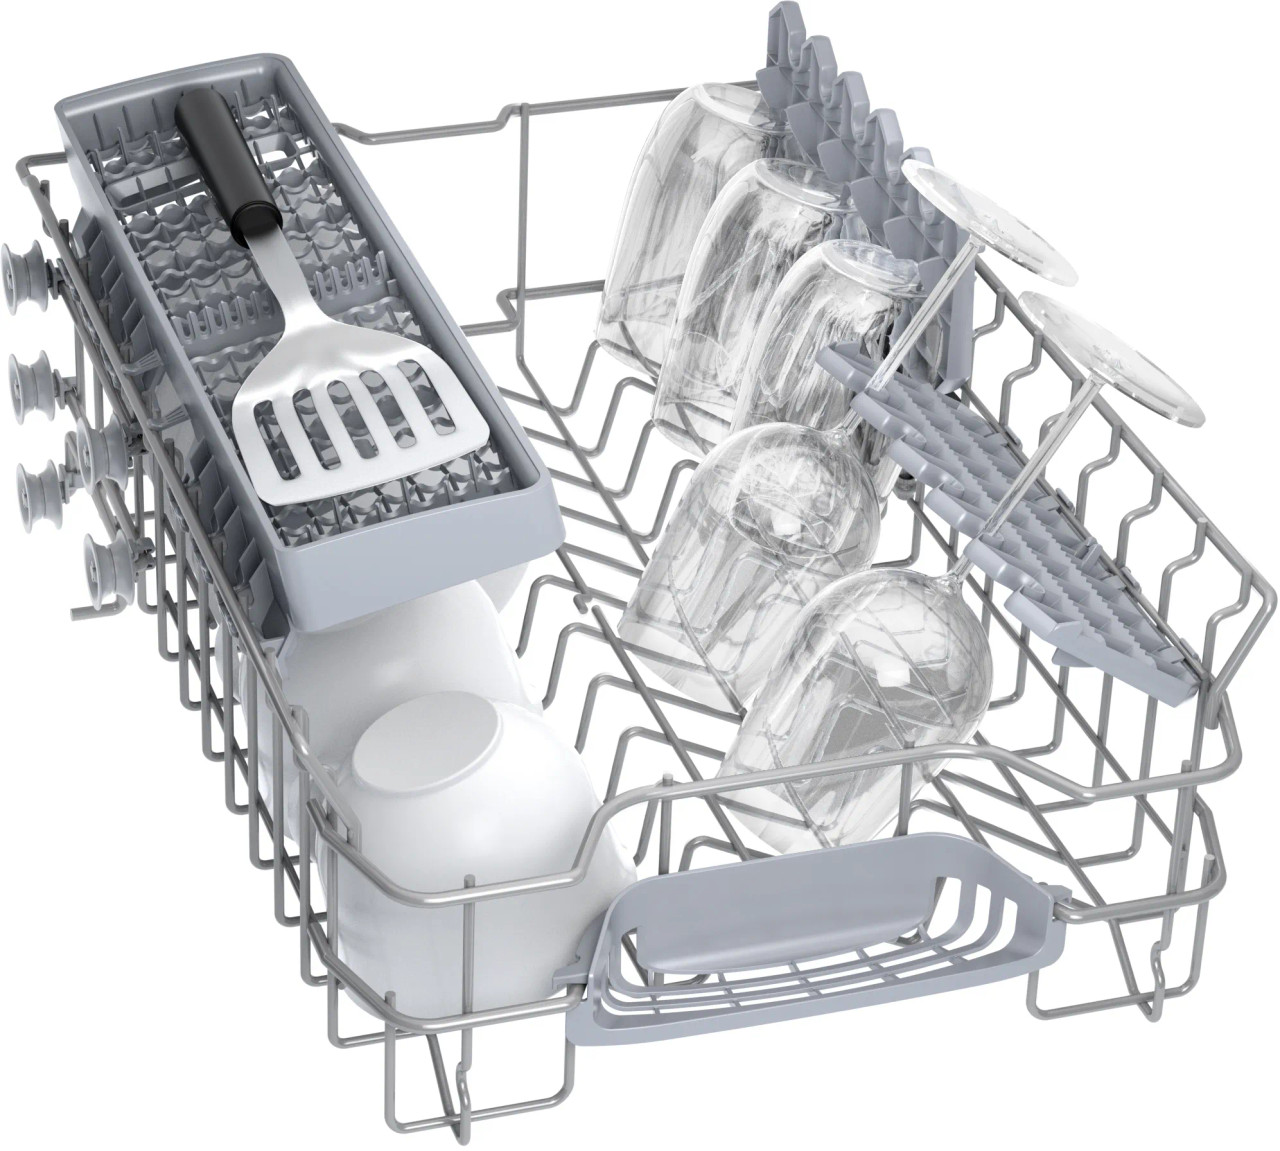 SPS6IKI01A - 45cm Series 6 Slimline Freestanding Dishwasher - Silver